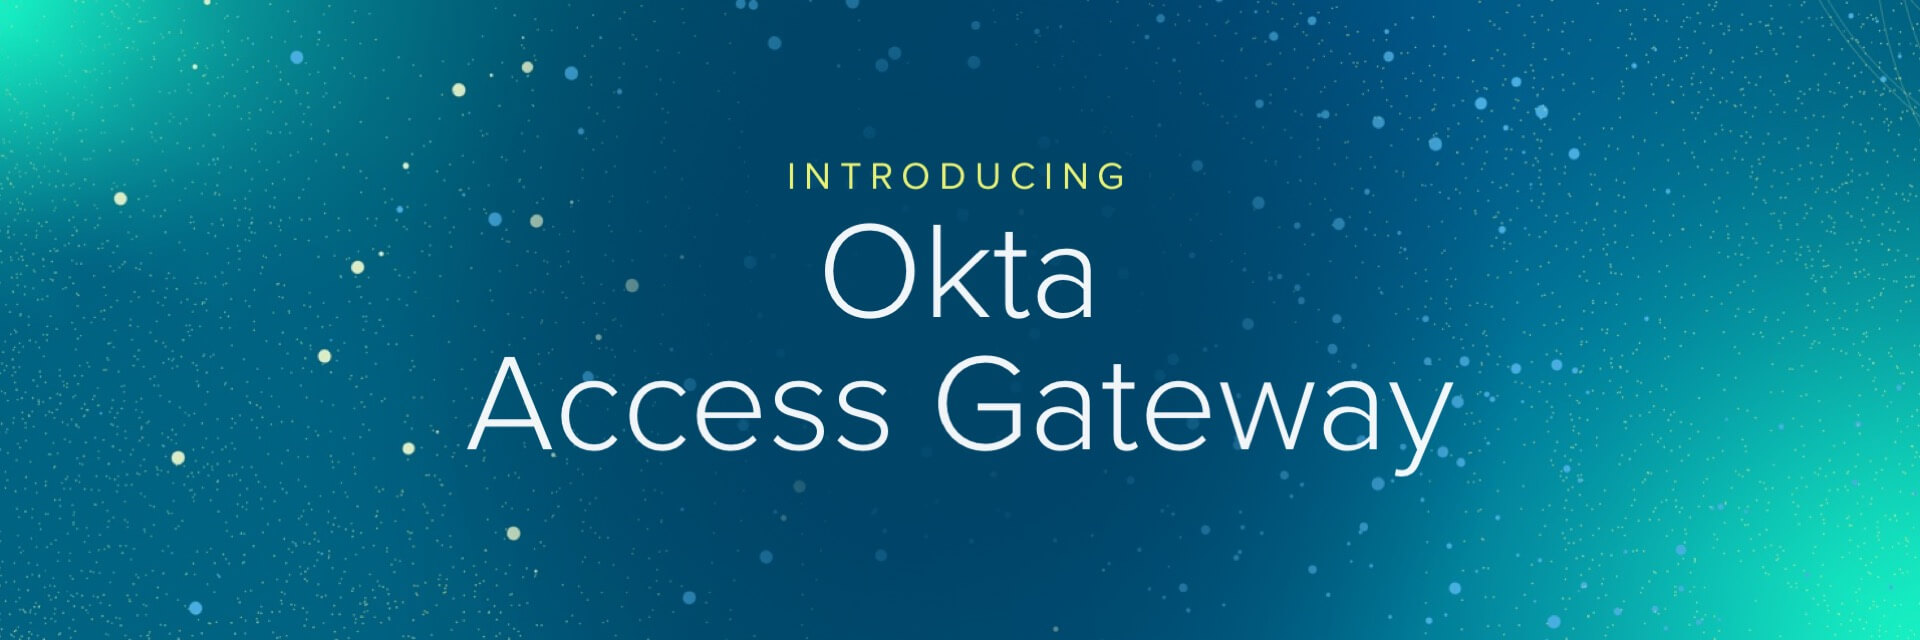 Okta Access Gateway Blog Post